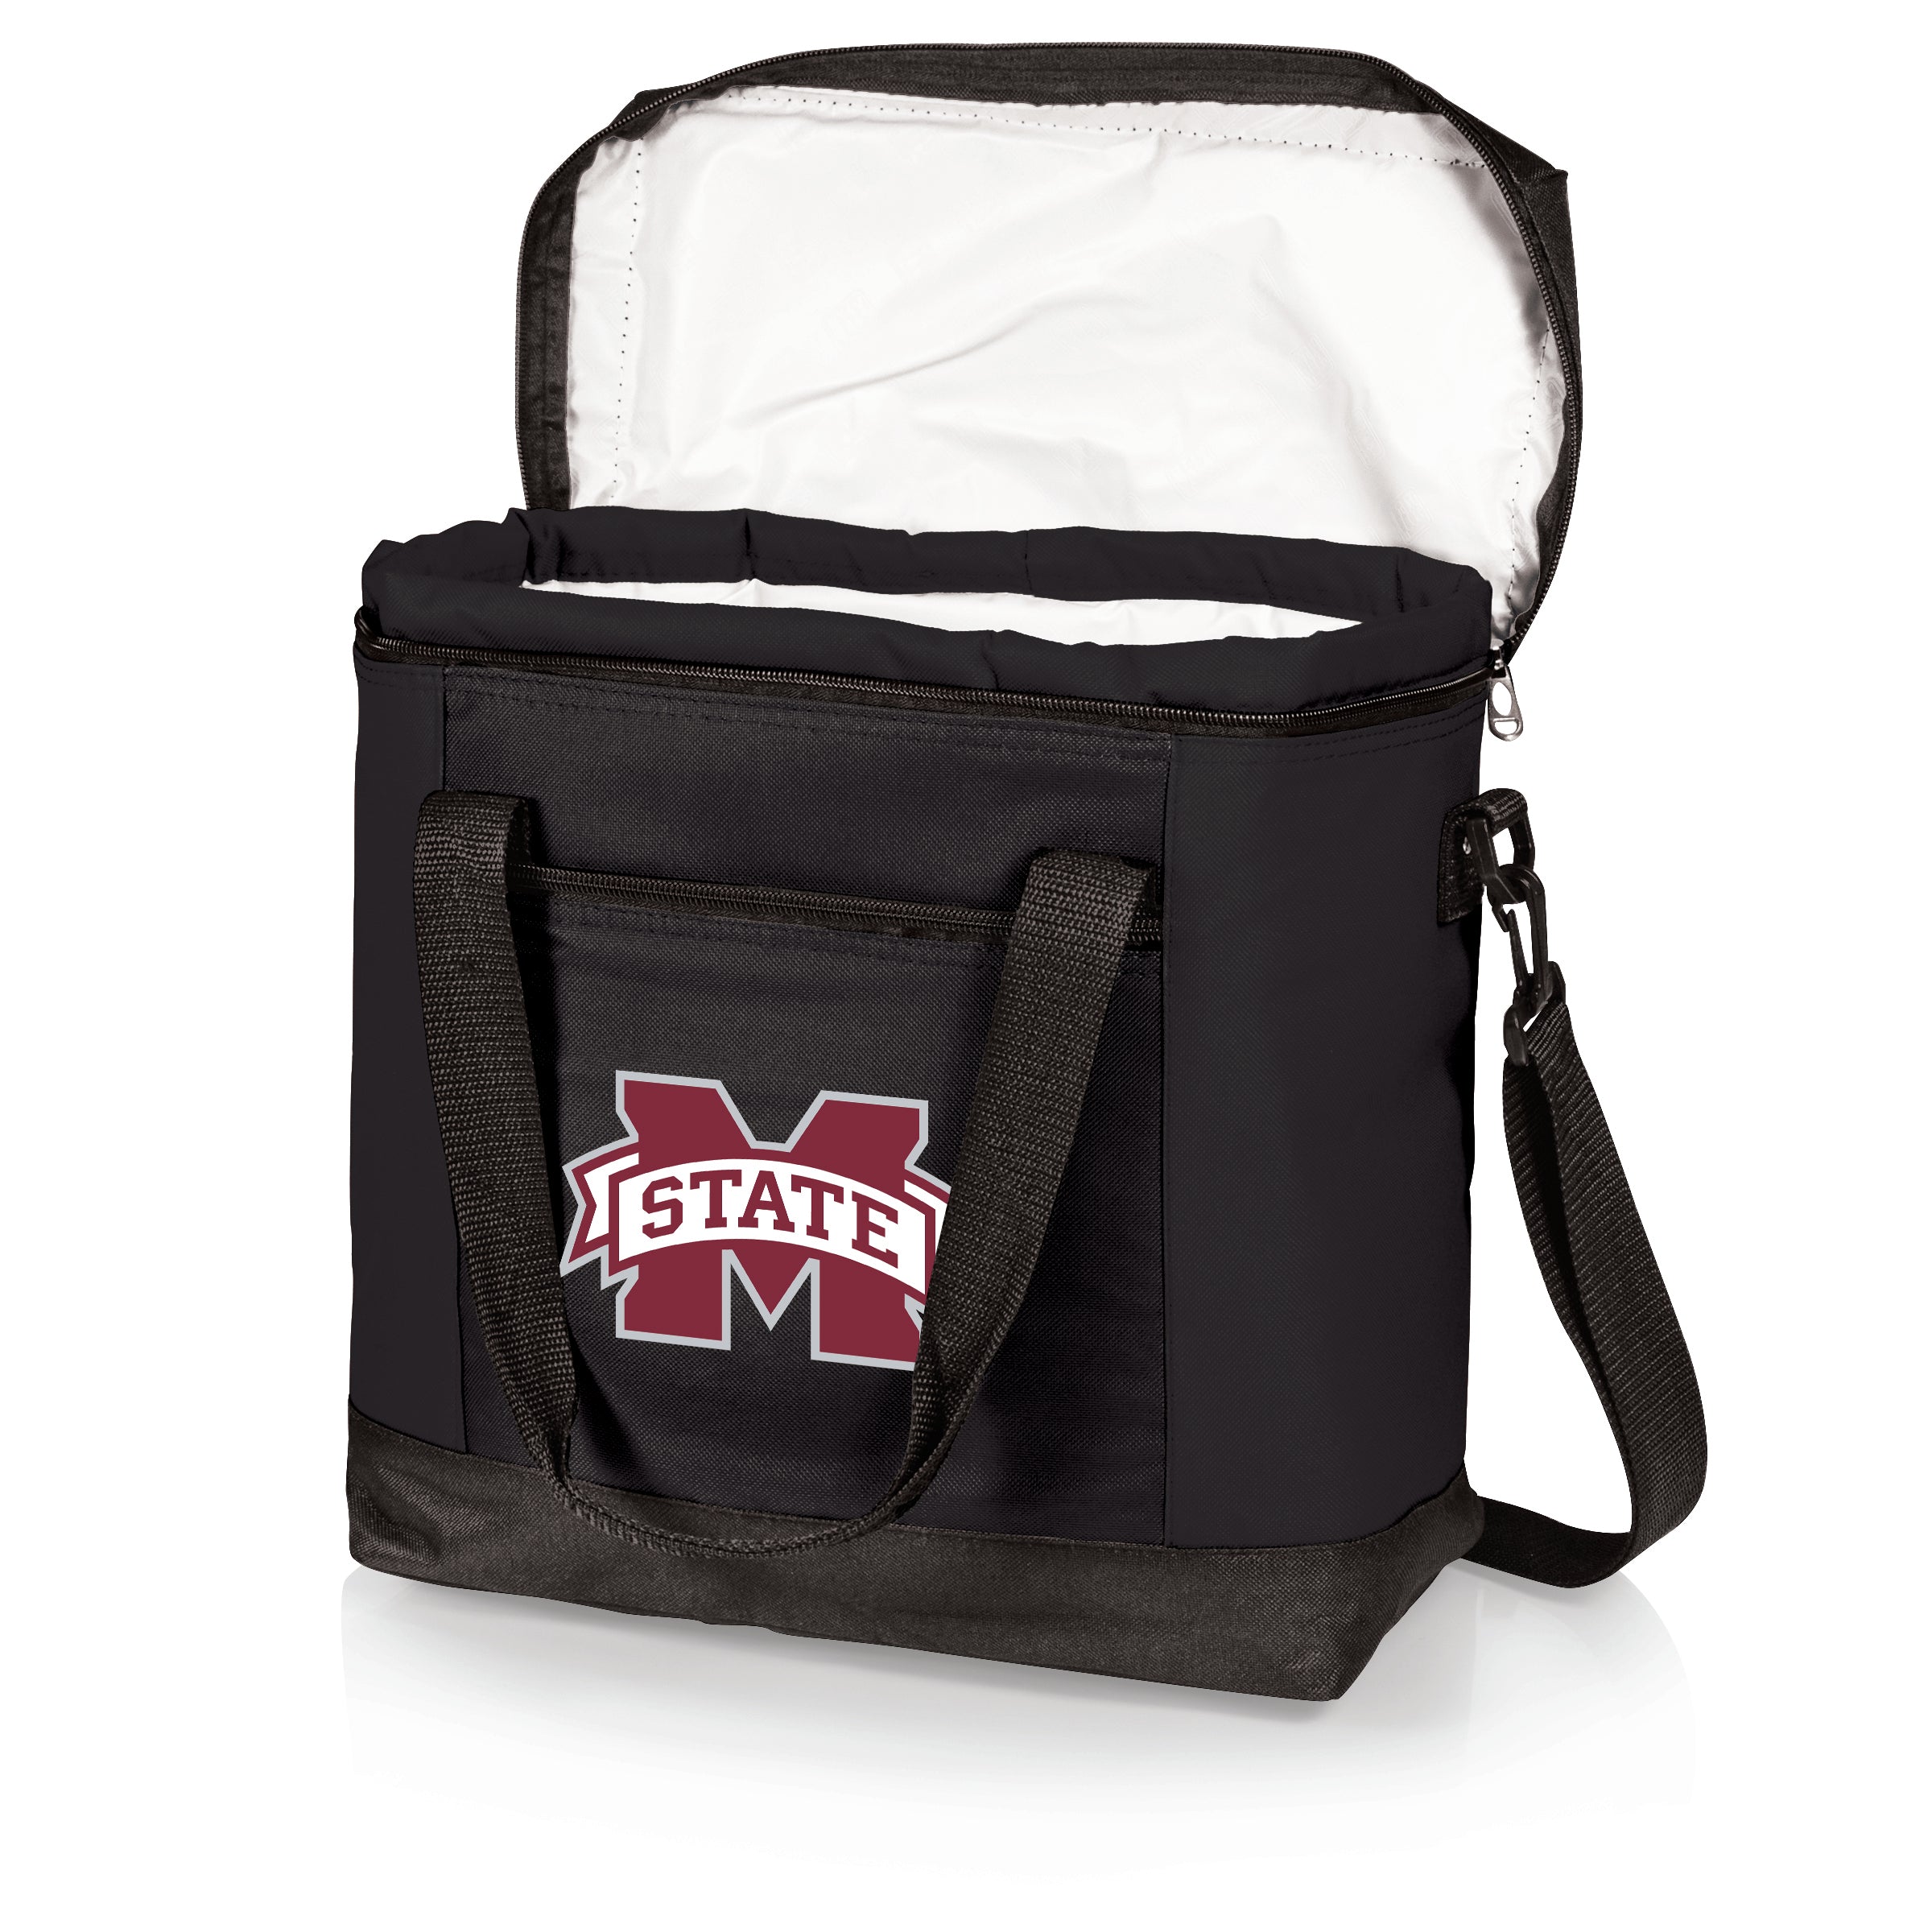 Mississippi State Bulldogs - Montero Cooler Tote Bag